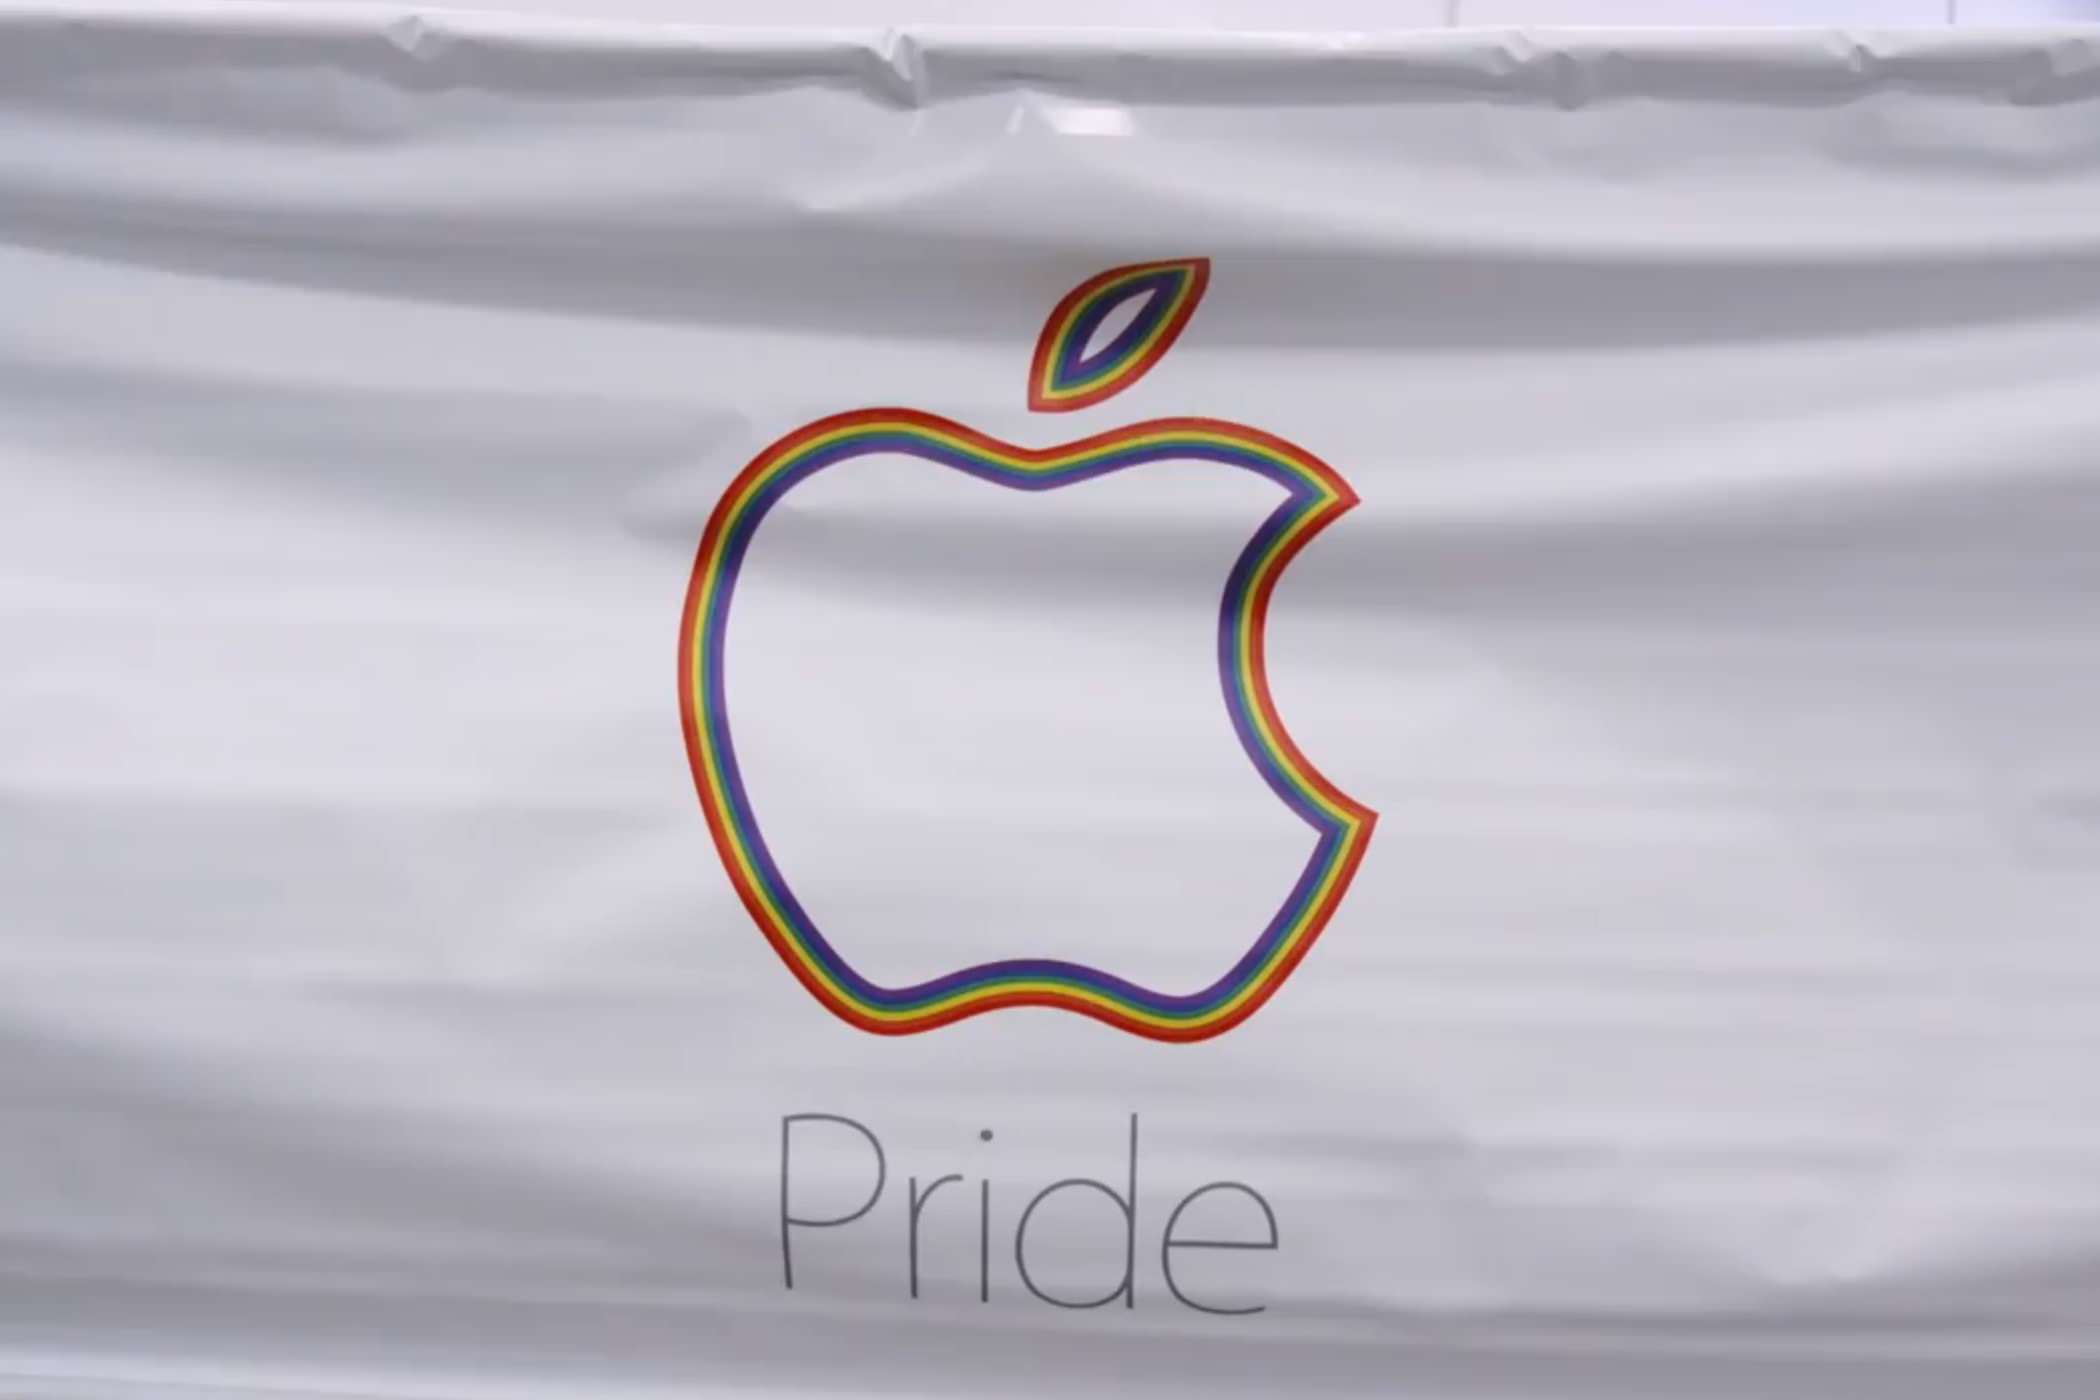 Apple `pride